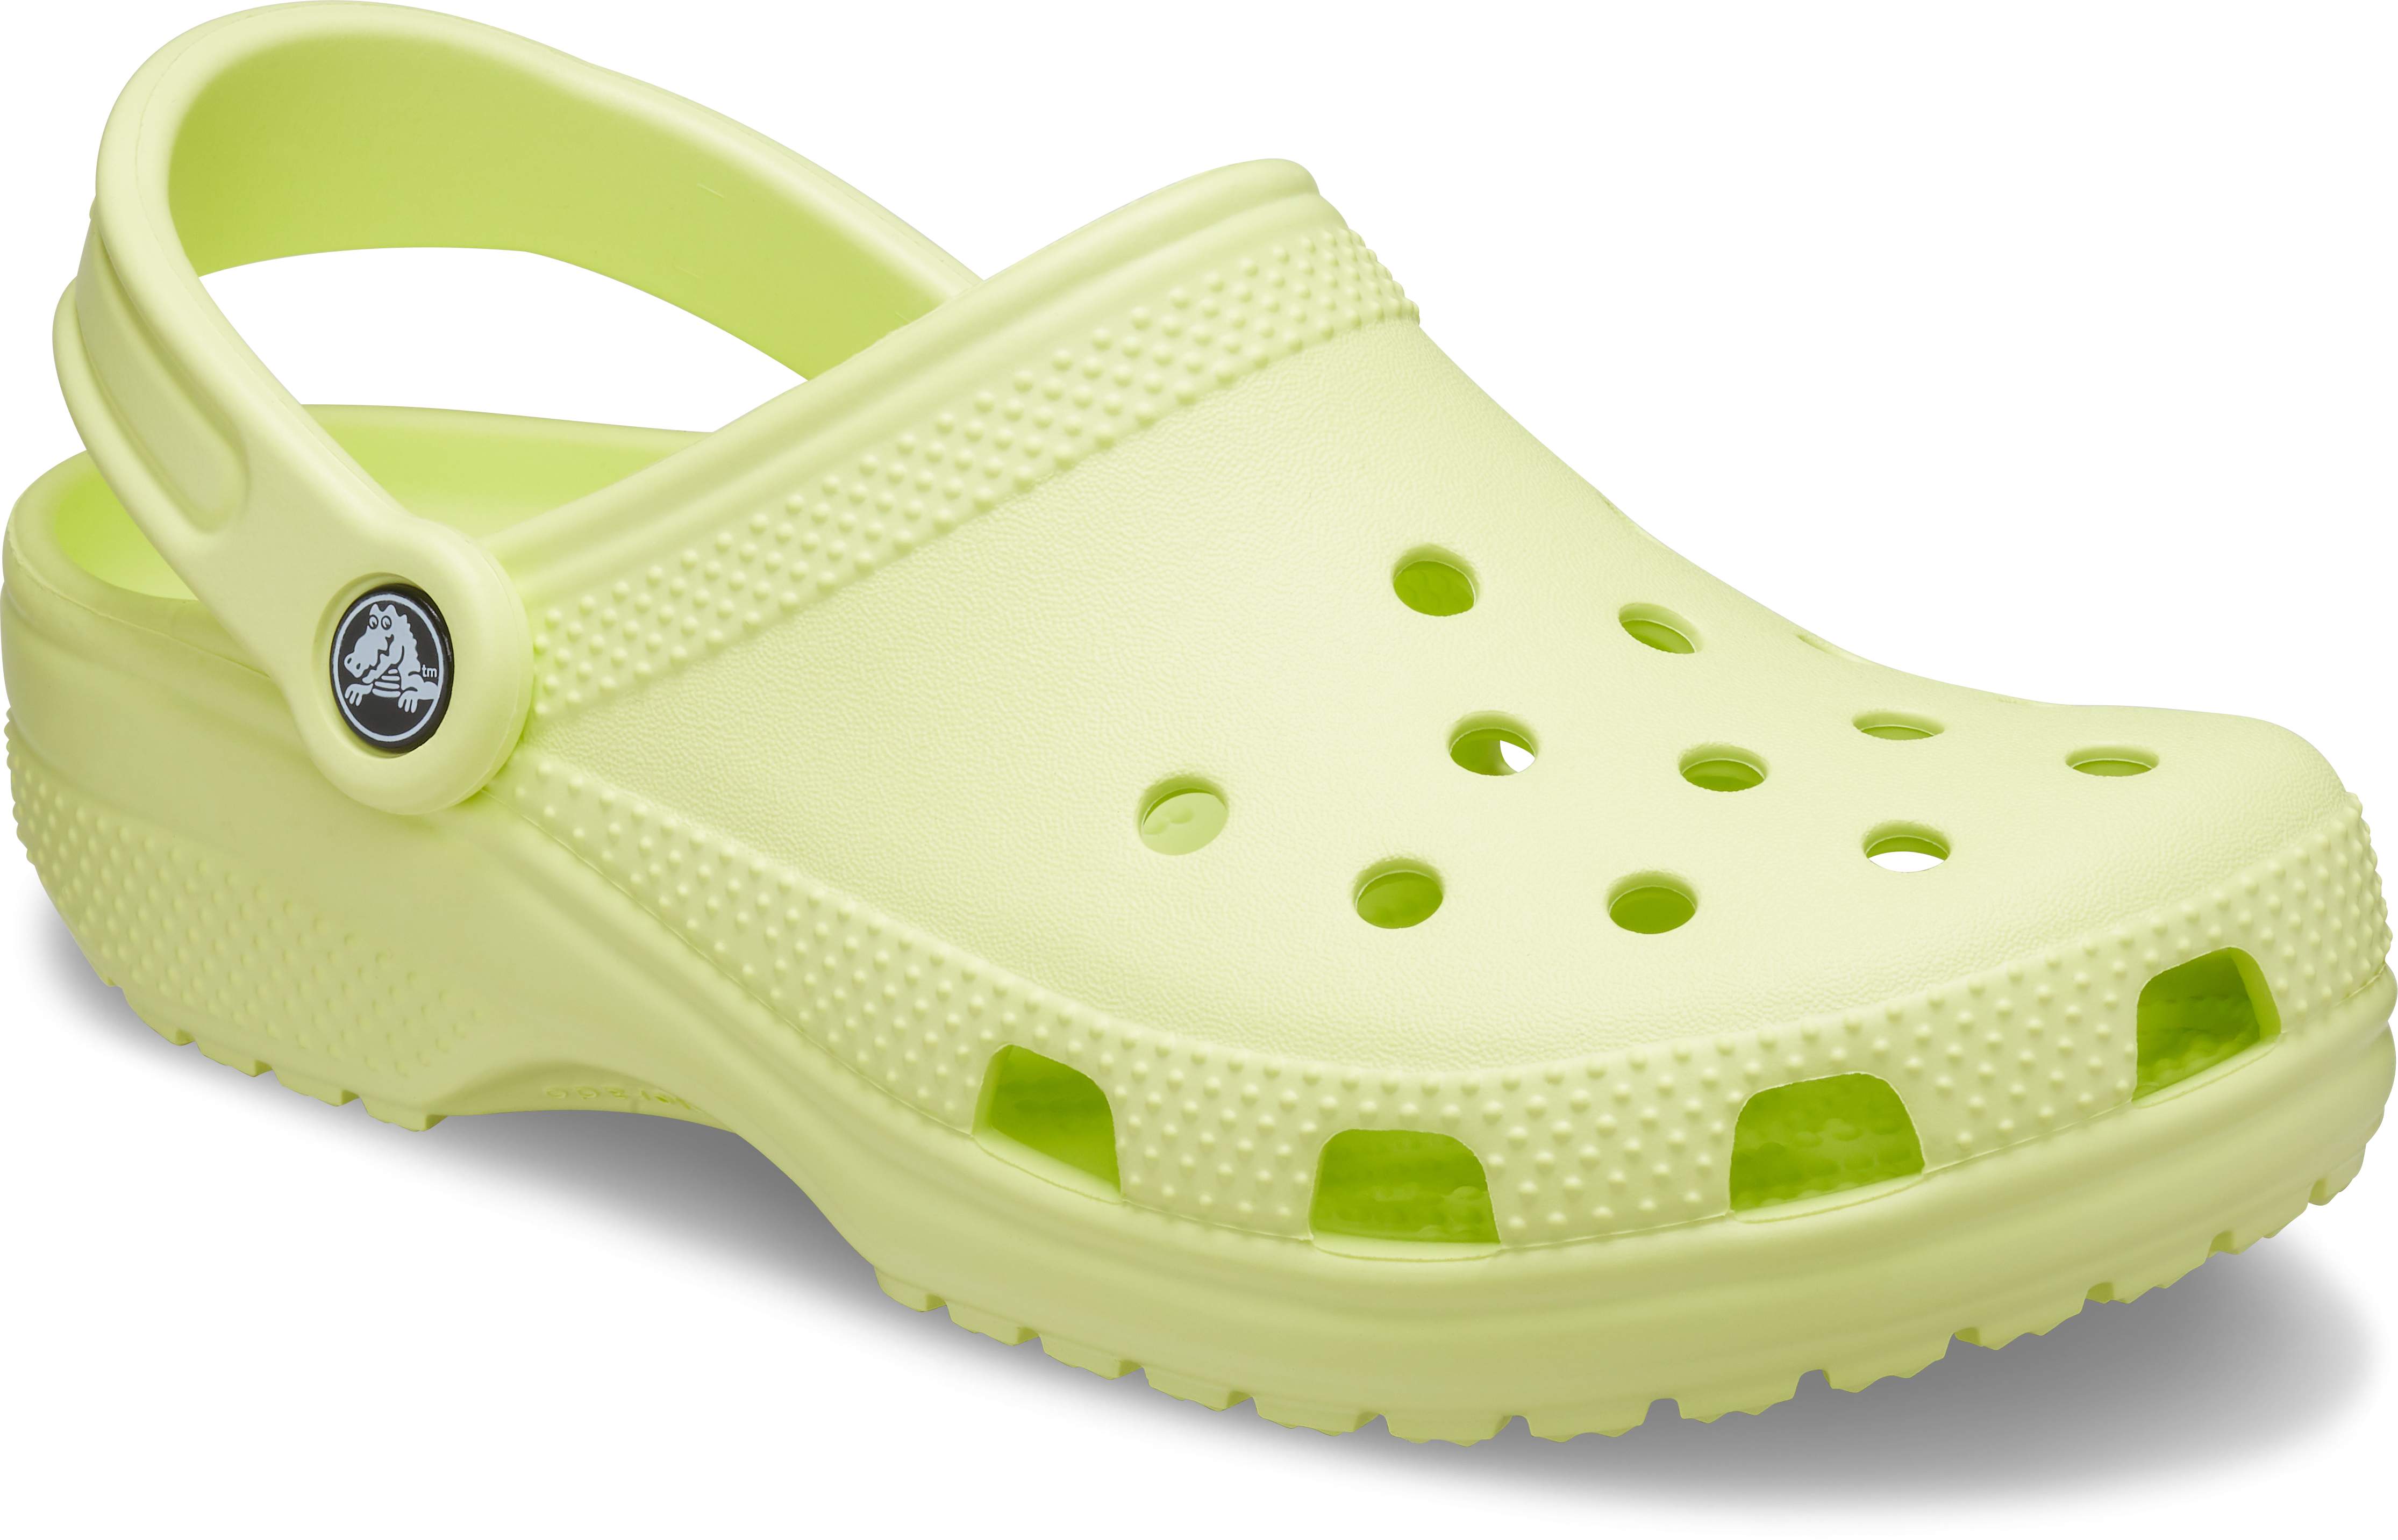 clogs for crocs